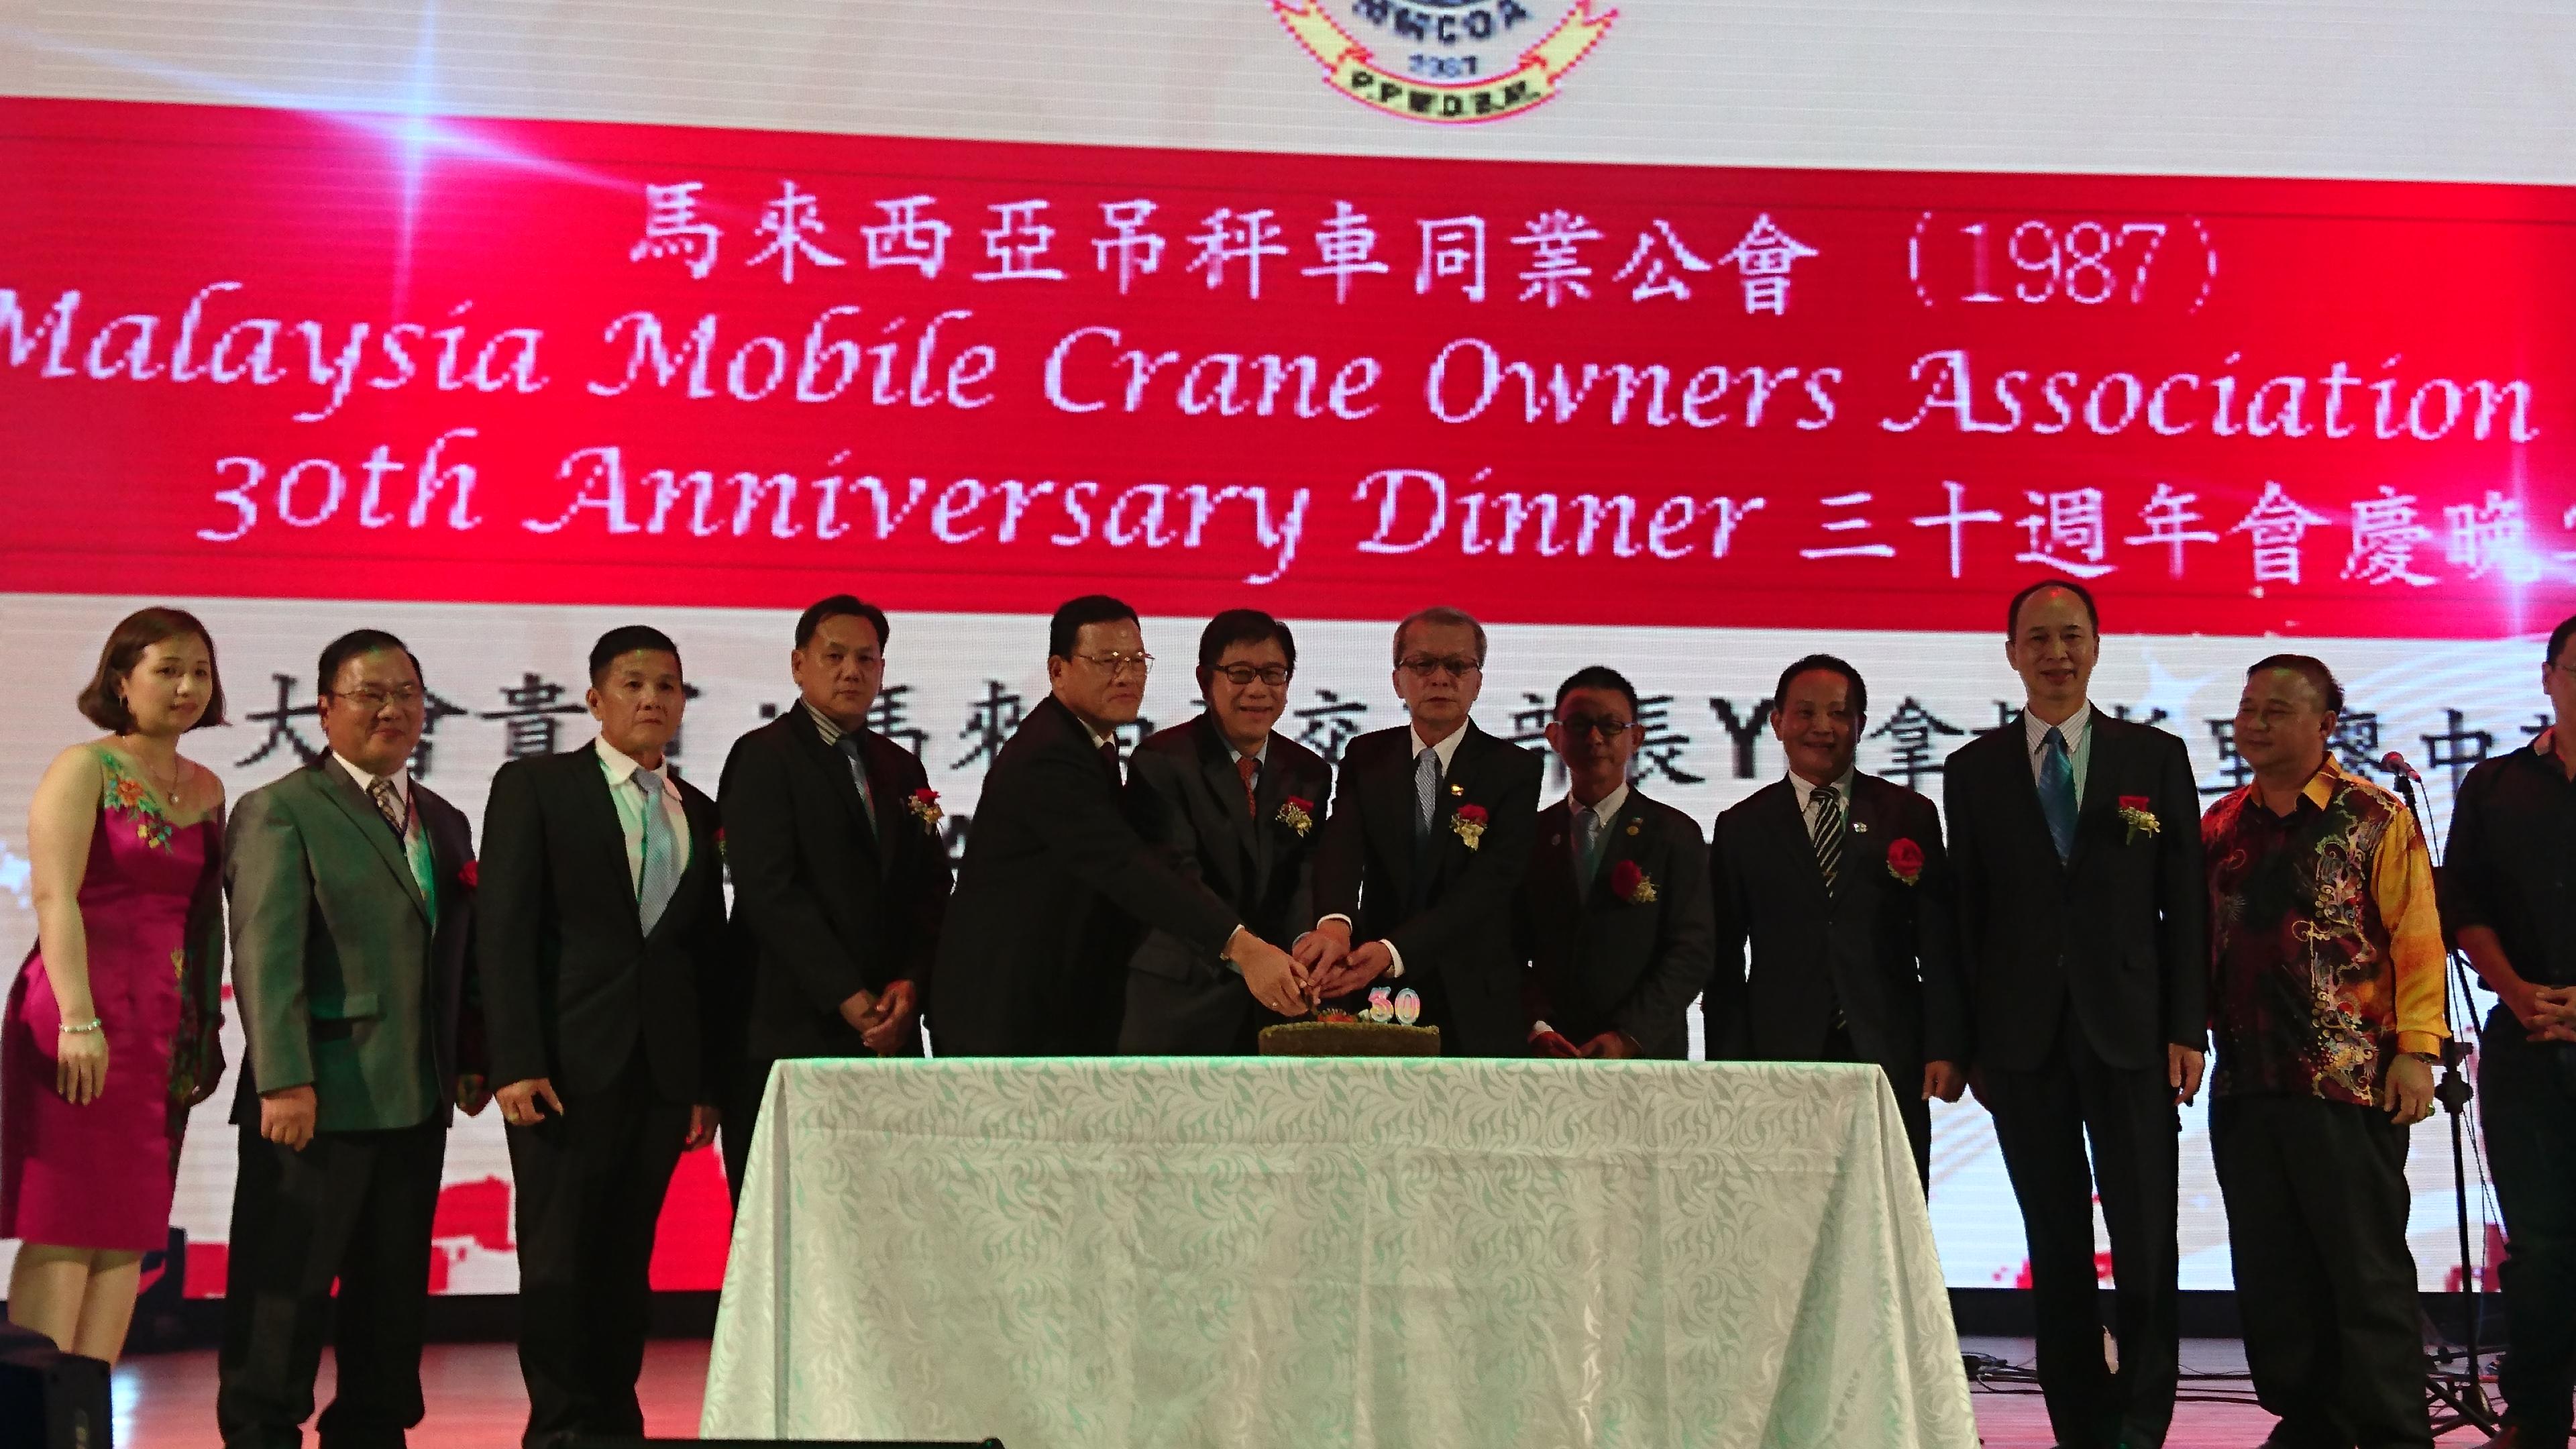  Wakil Chang, James Chi-ping menghadiri Malaysia Mobile Crane Owners Association 30th Anniversary Dinner pada April 22, 2017.
